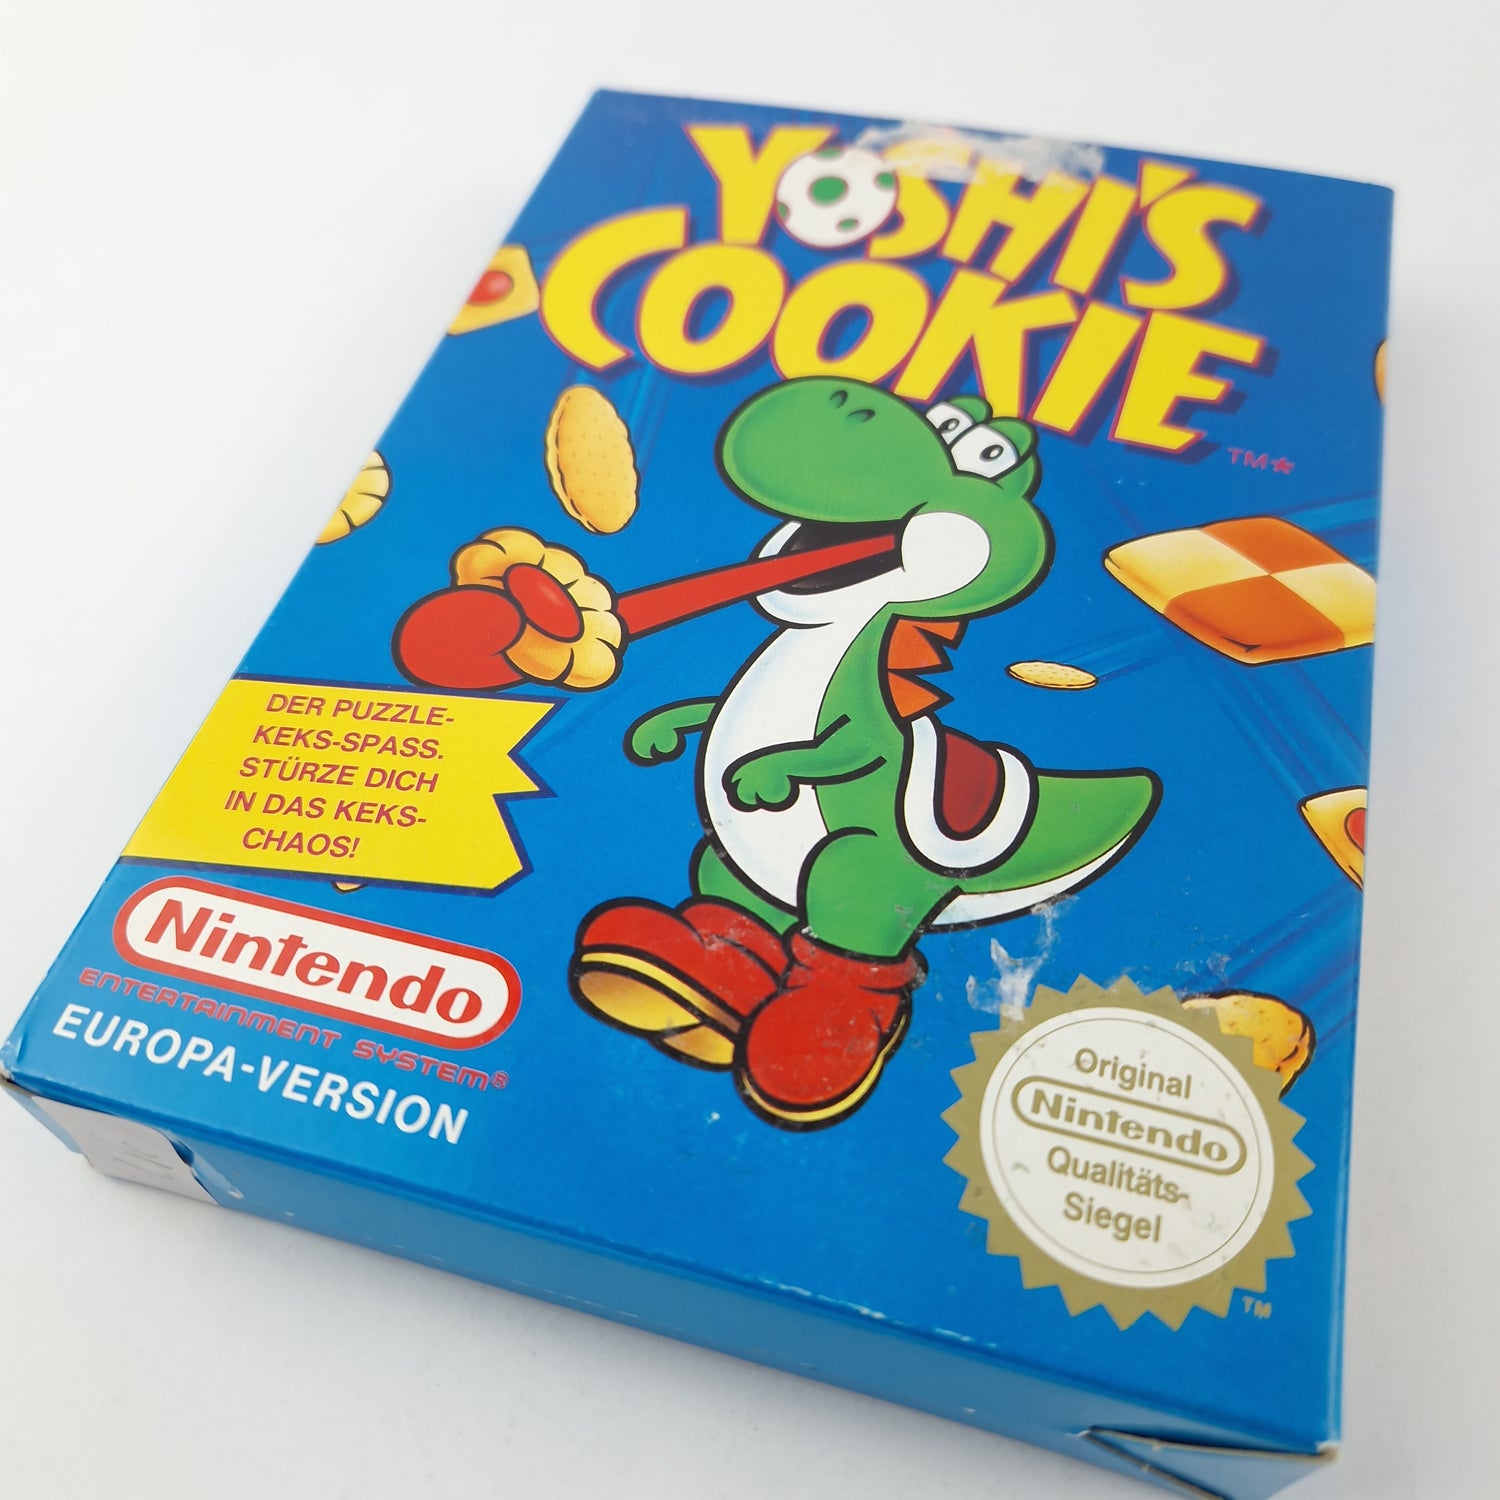 Nintendo NES Spiel : Yoshis Cookie - Modul Cartridge Anleitung OVP cib PAL